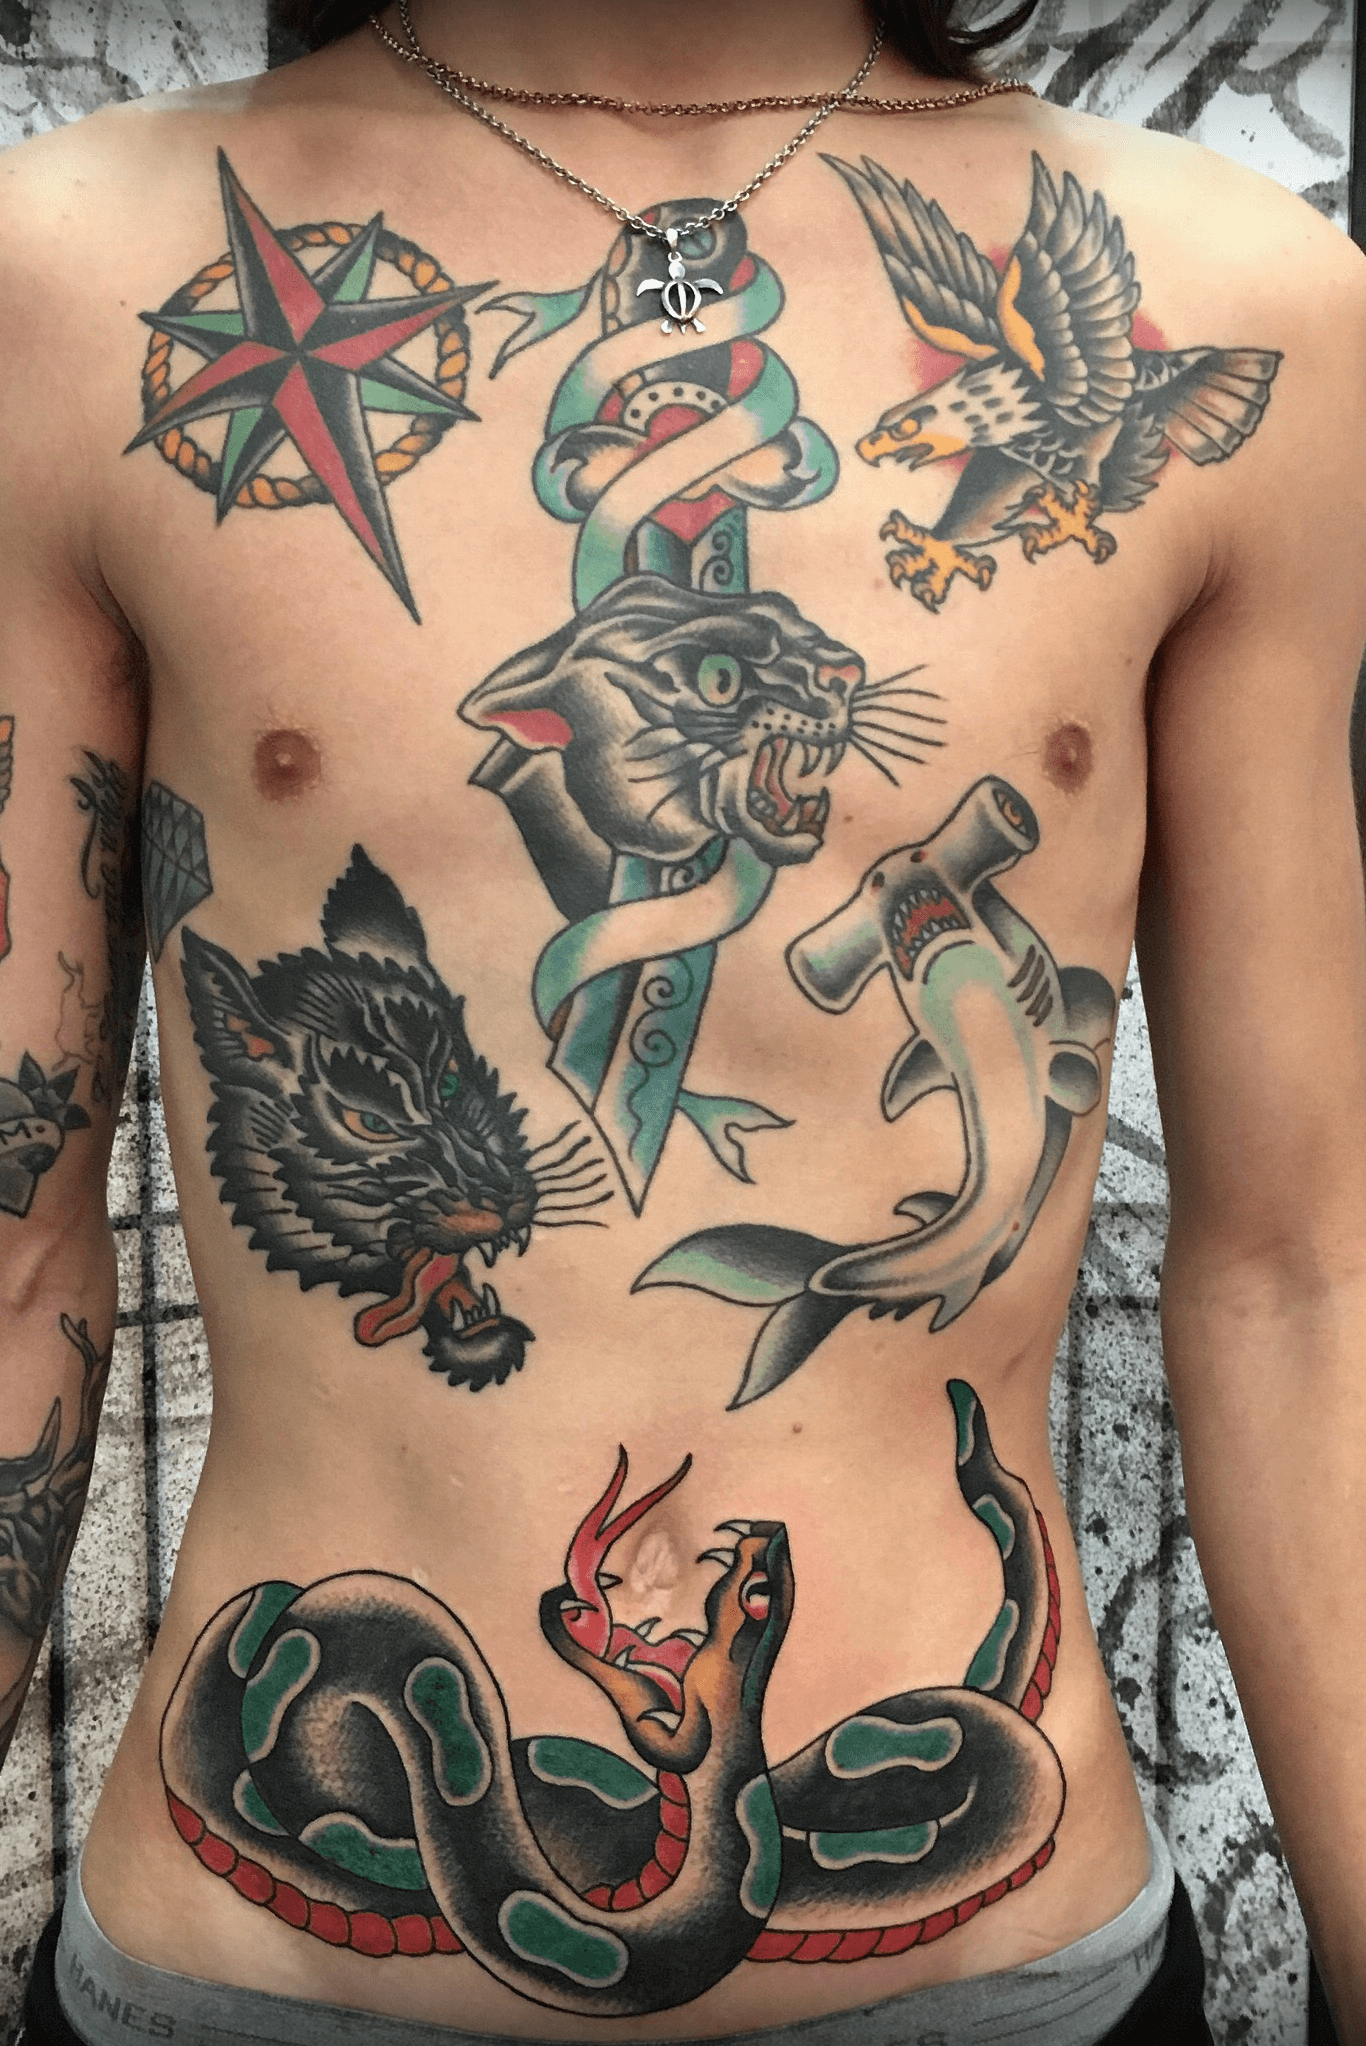 19 Amazing Dagger Tattoos On Stomach  Tattoo Designs  TattoosBagcom